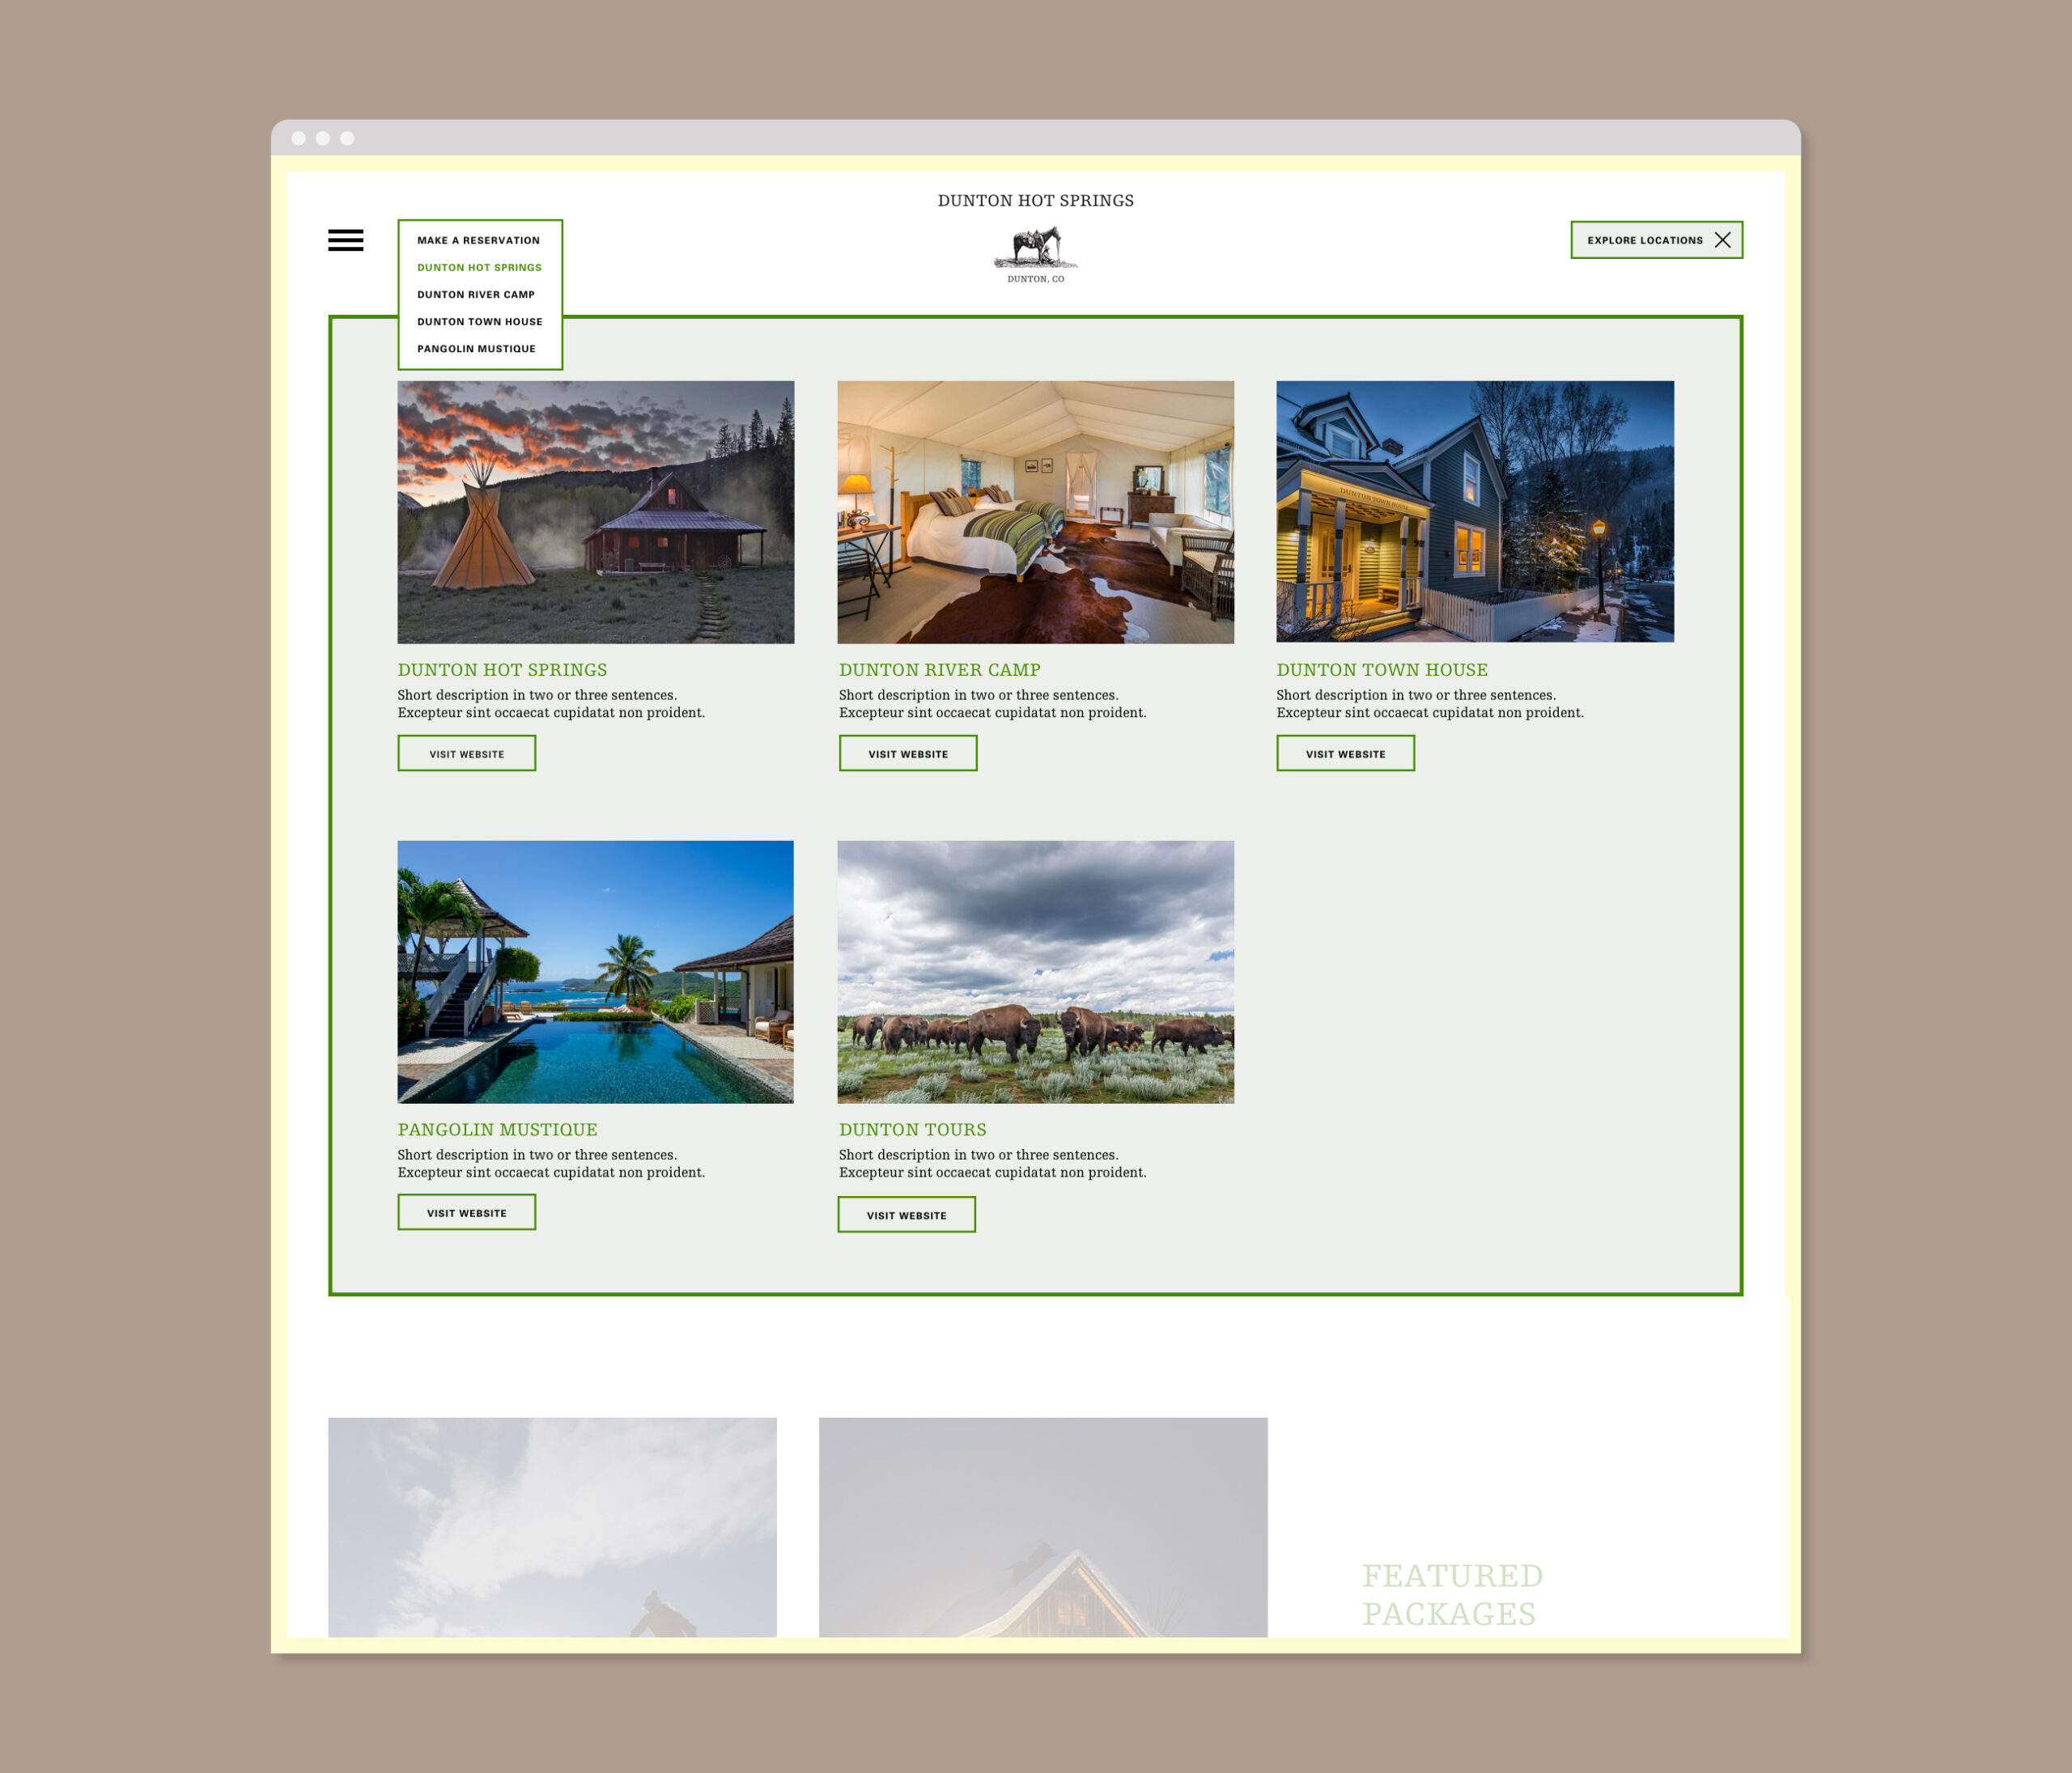 Dunton Hot Springs website menu interface